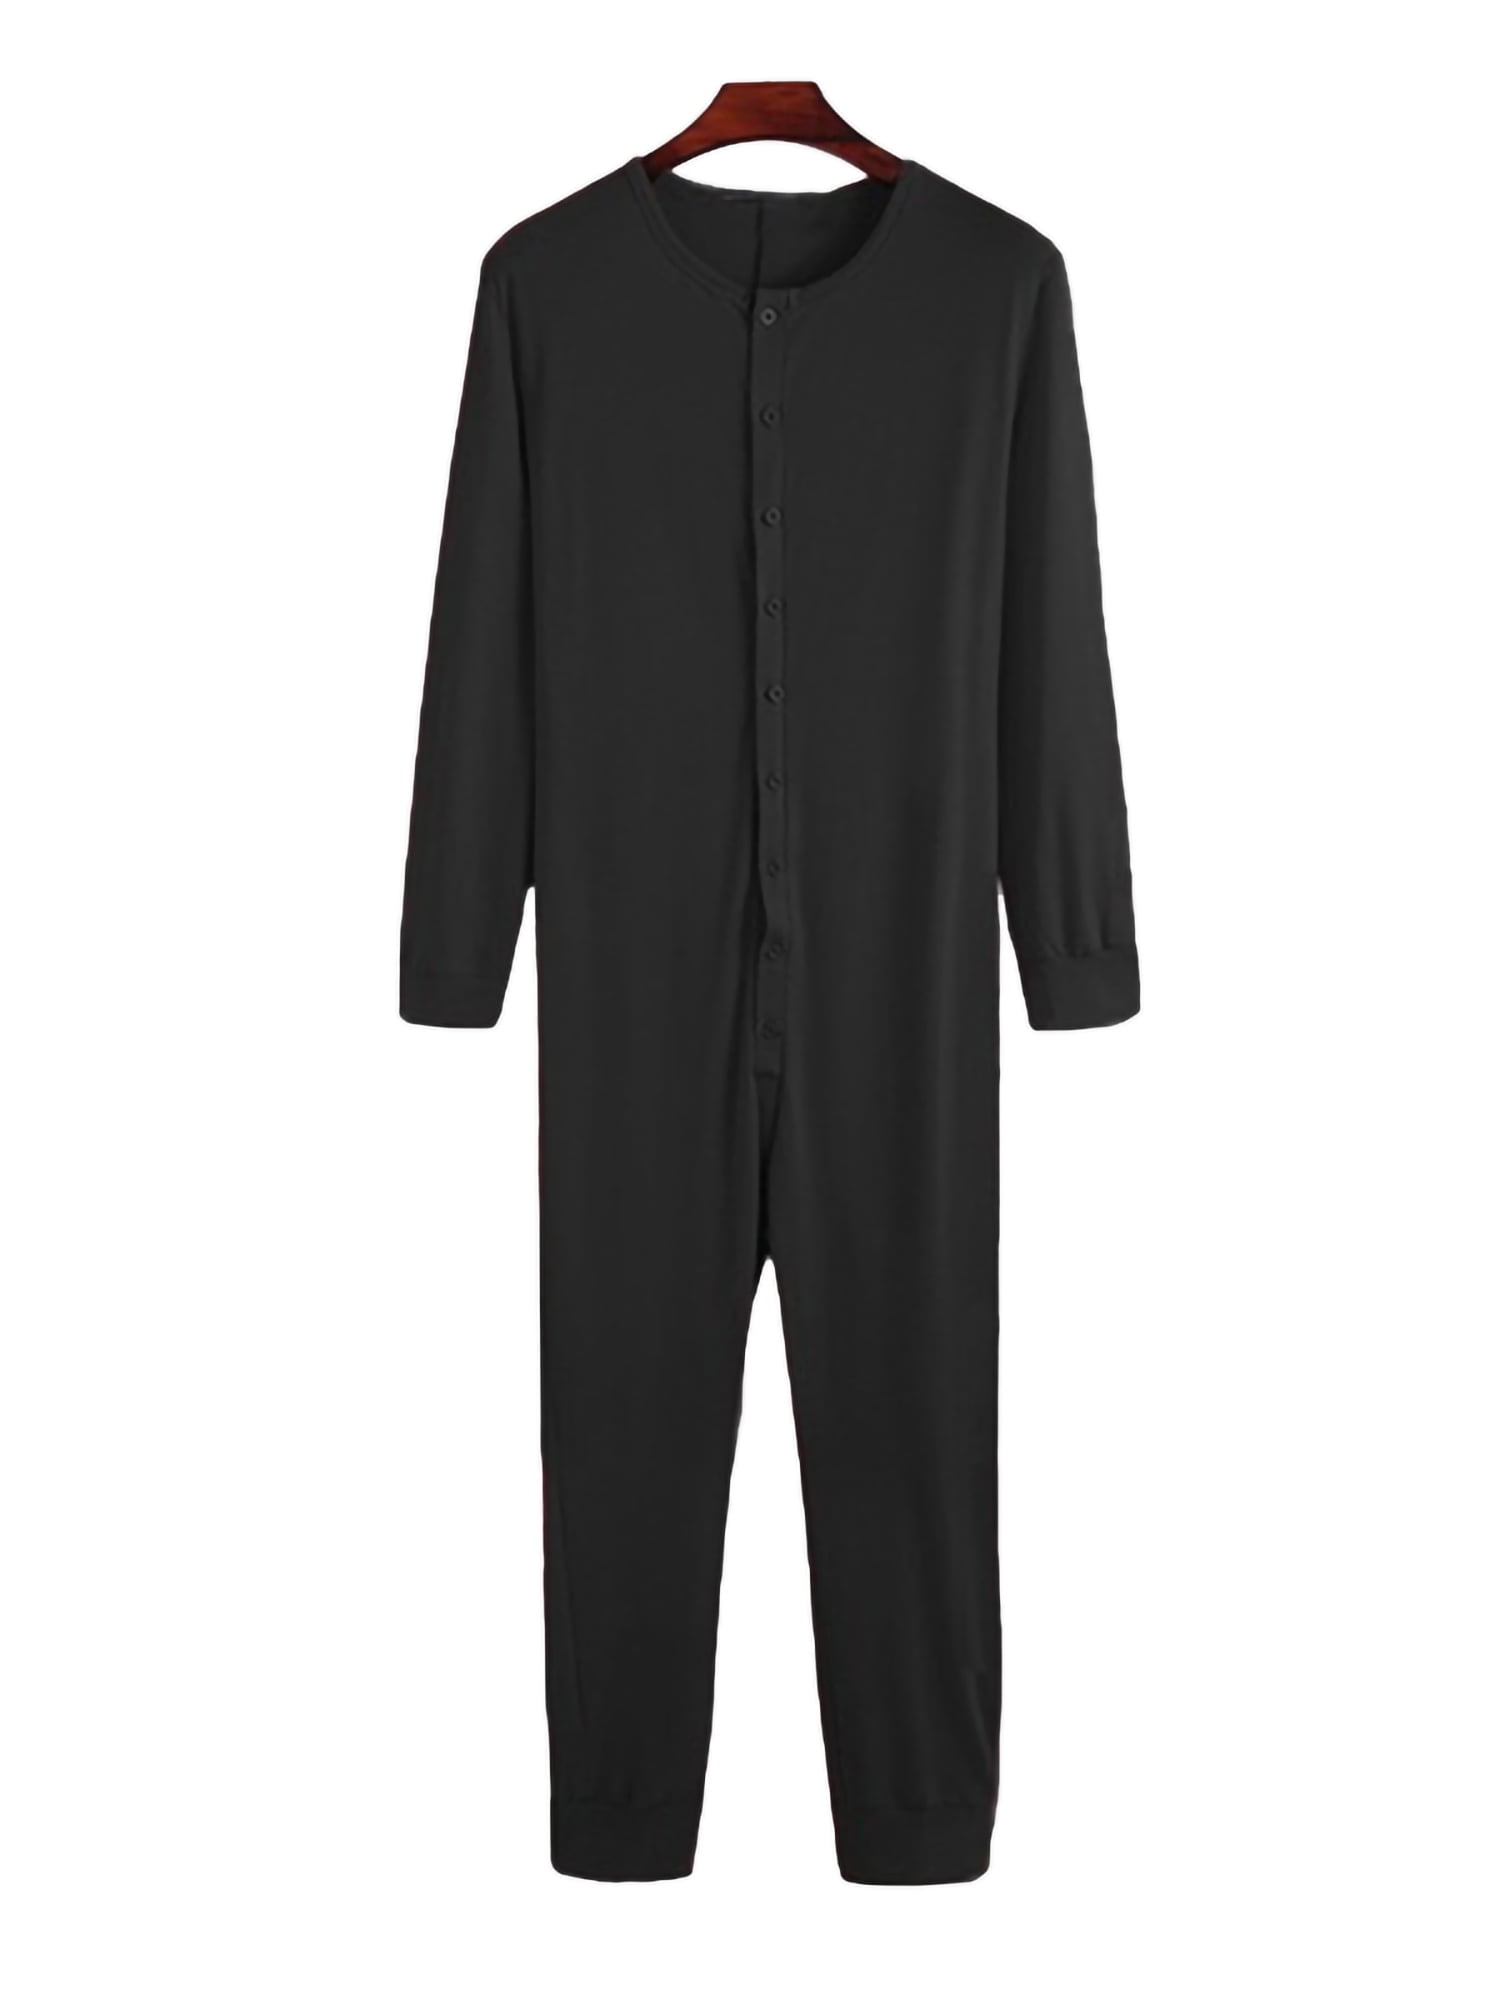 Avamo Men Union Suit Solid Color One Piece Pajama Underwear Bodysuit  Outwear Casual Sleepwear Plain Long Sleeve Onesie Pajamas Black L 